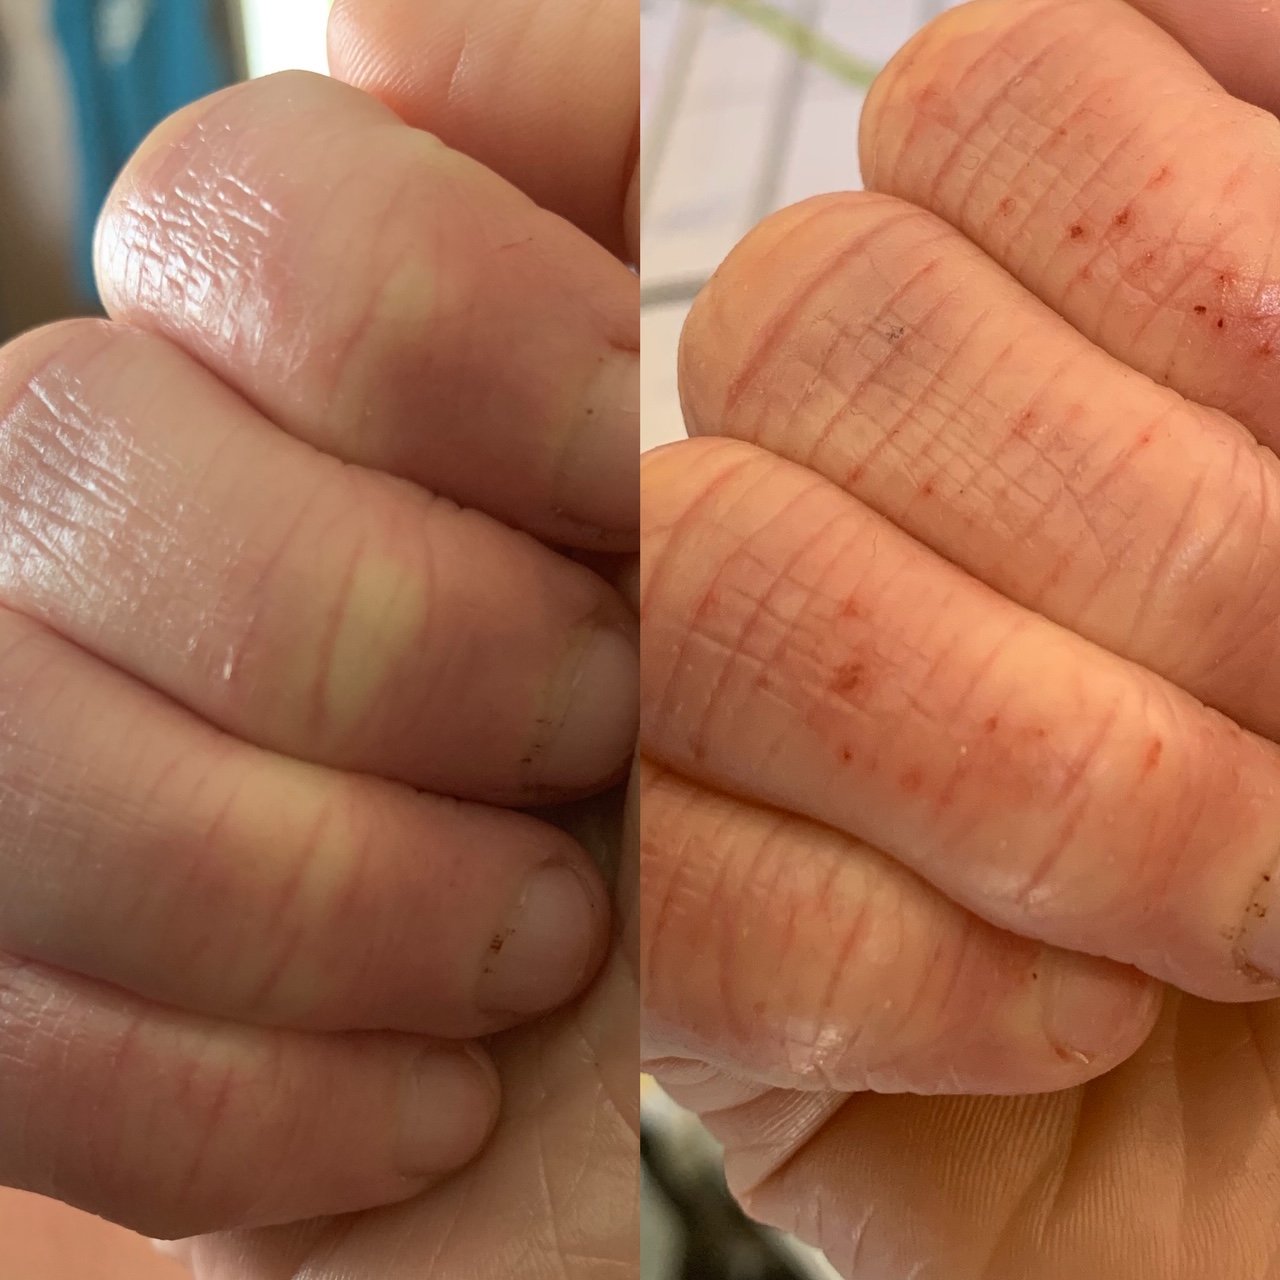 Healing bad hand eczema